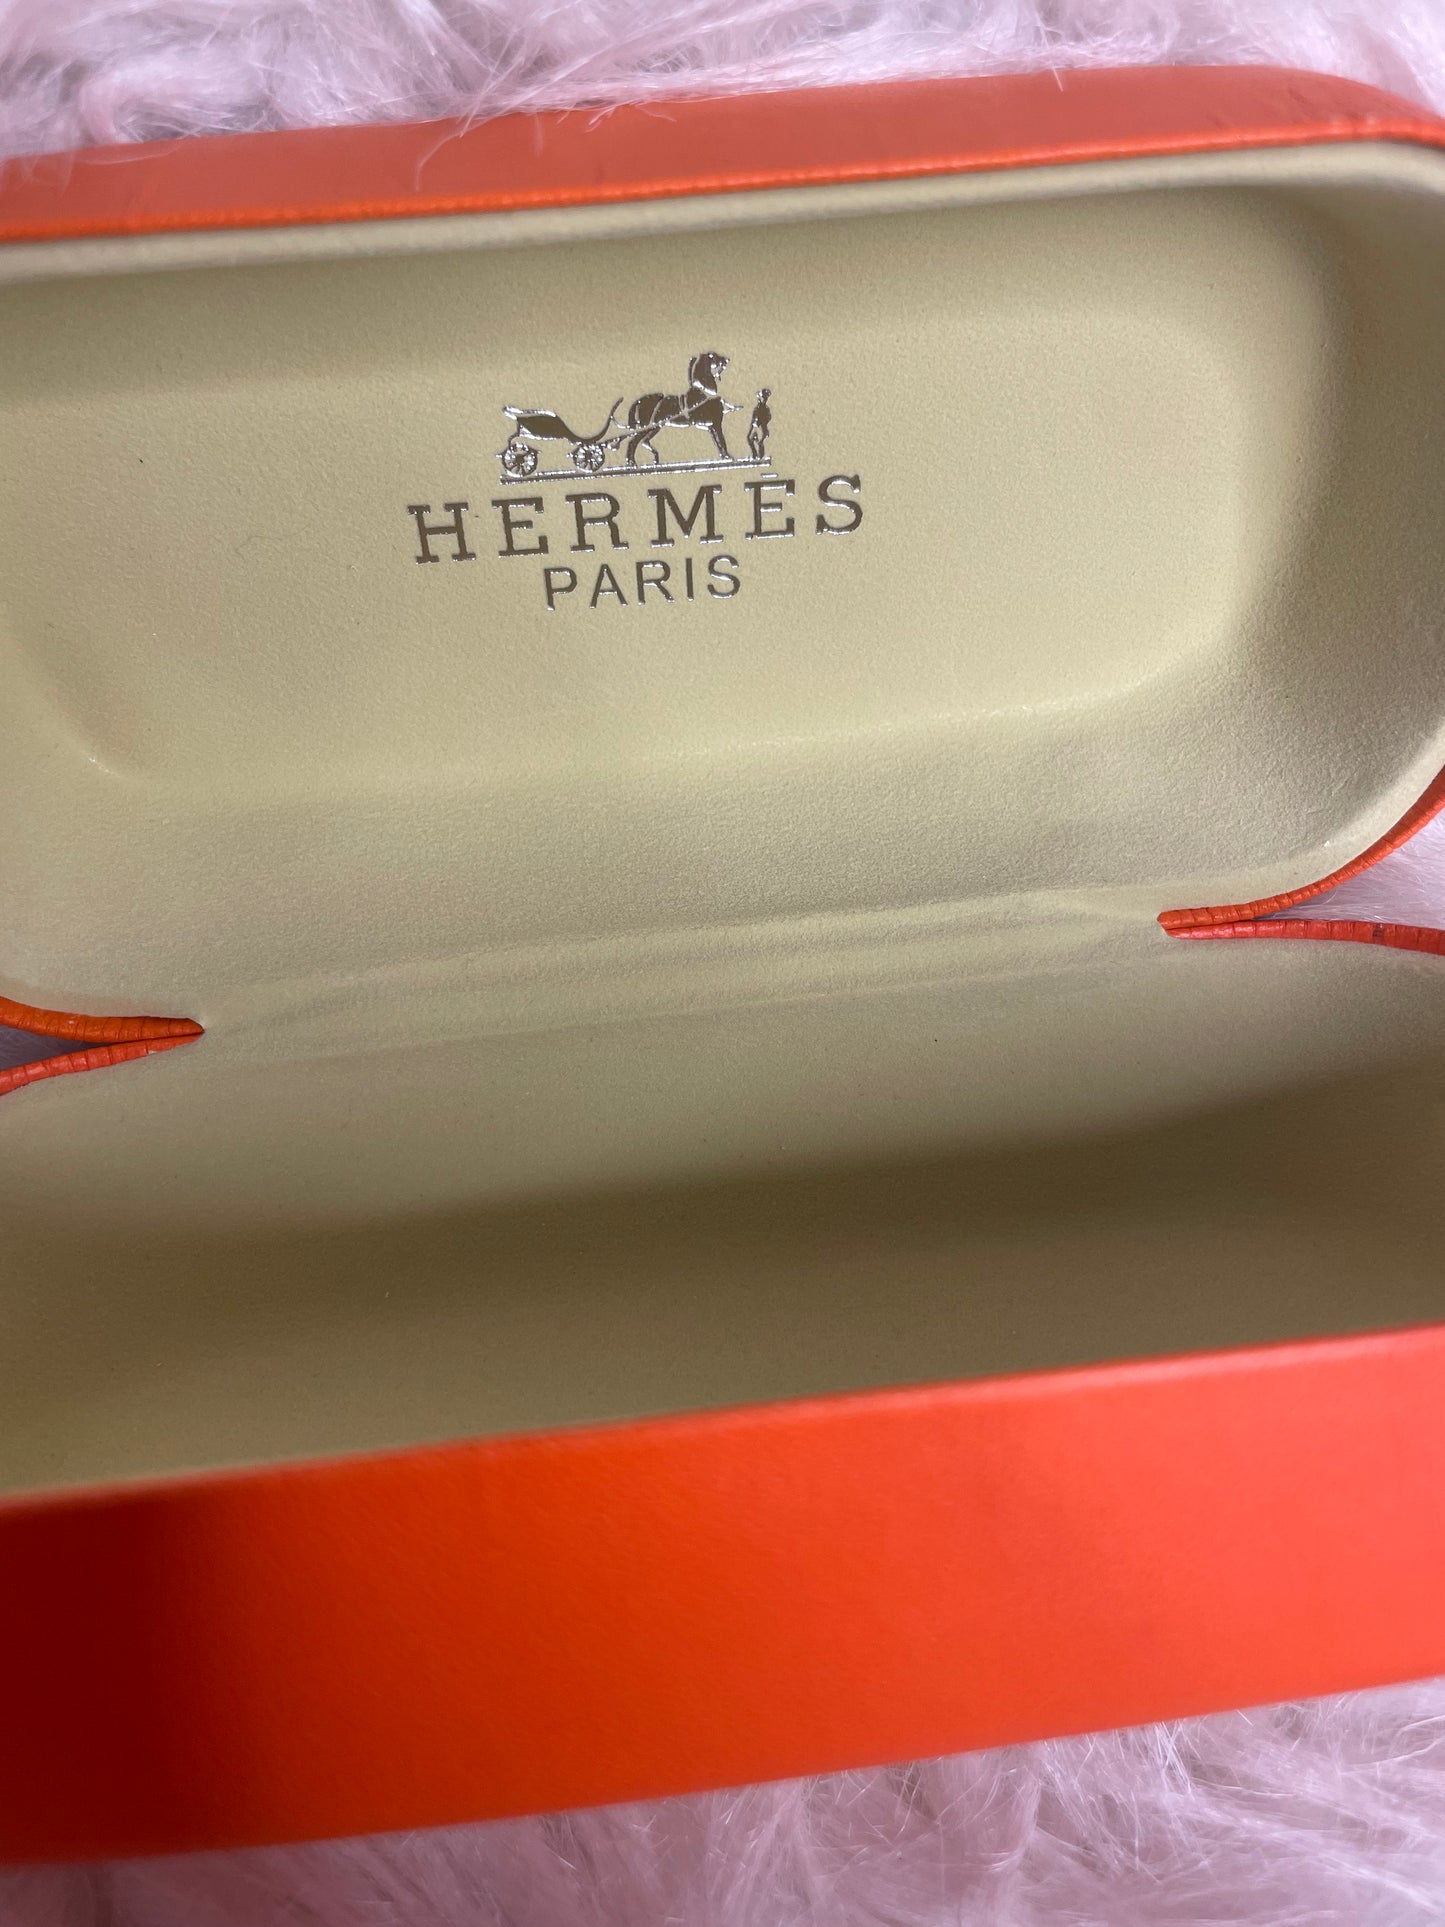 Shades inspired Hermes Paris